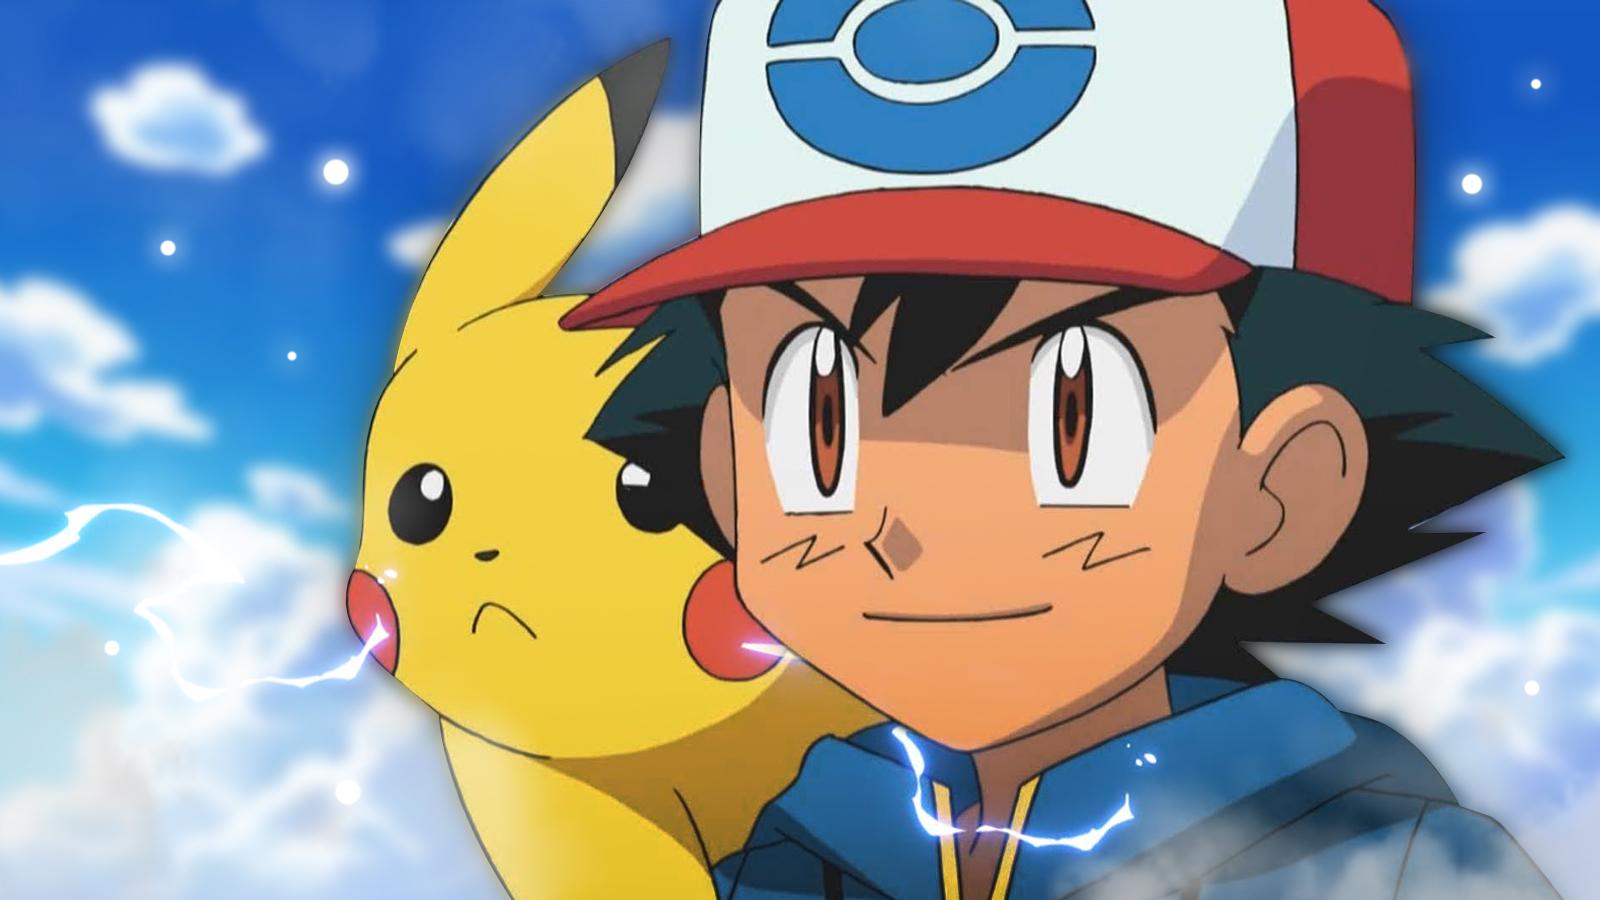 Want a Pokémon Red and Blue movie? Watch the Pokémon Origins anime